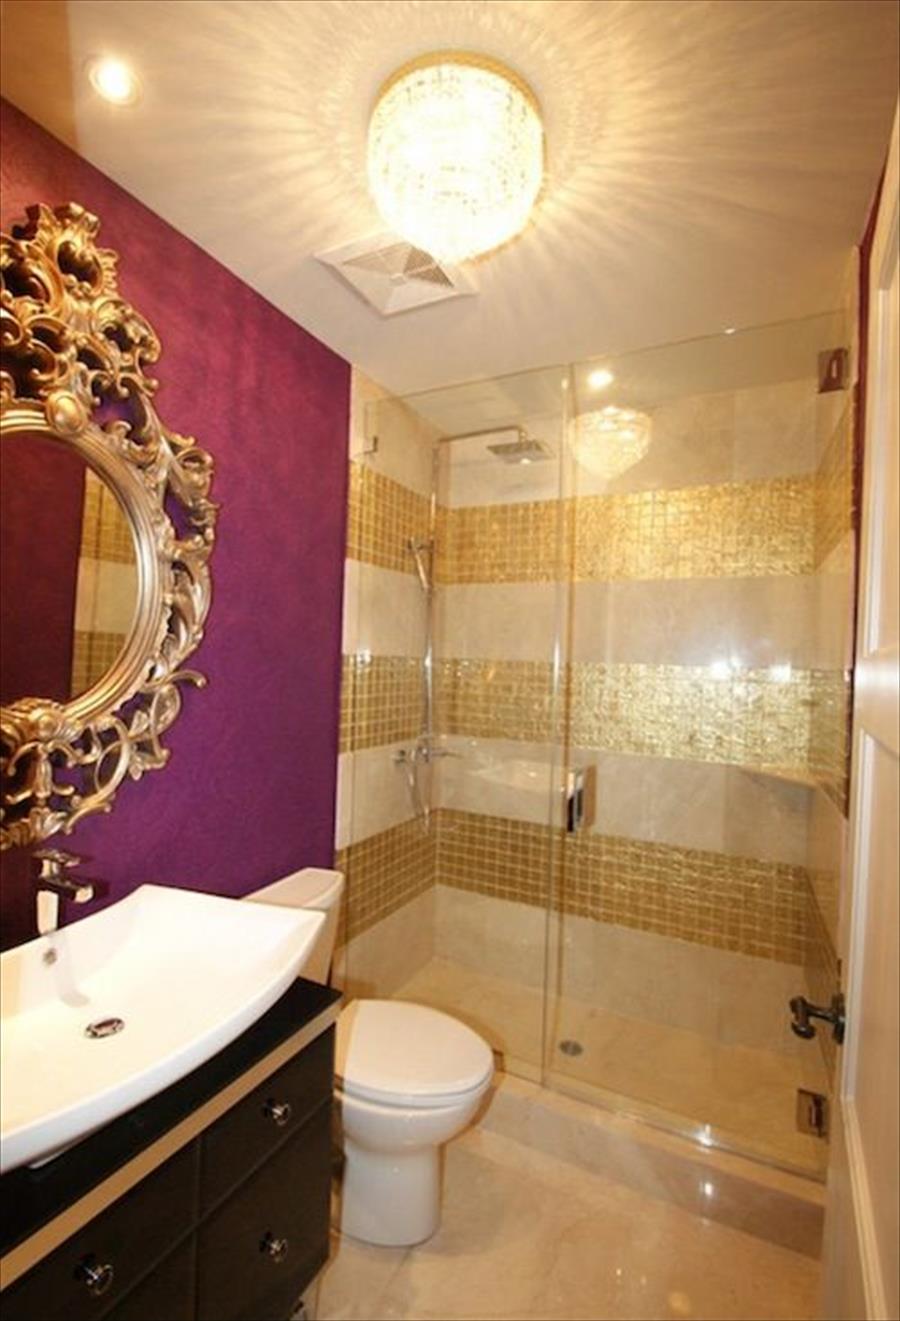 Gold and purple bathroom design idea #bathroom #bathroomdesign #bathroomideas #bathroomreno #bathroomremodel #decorhomeideas